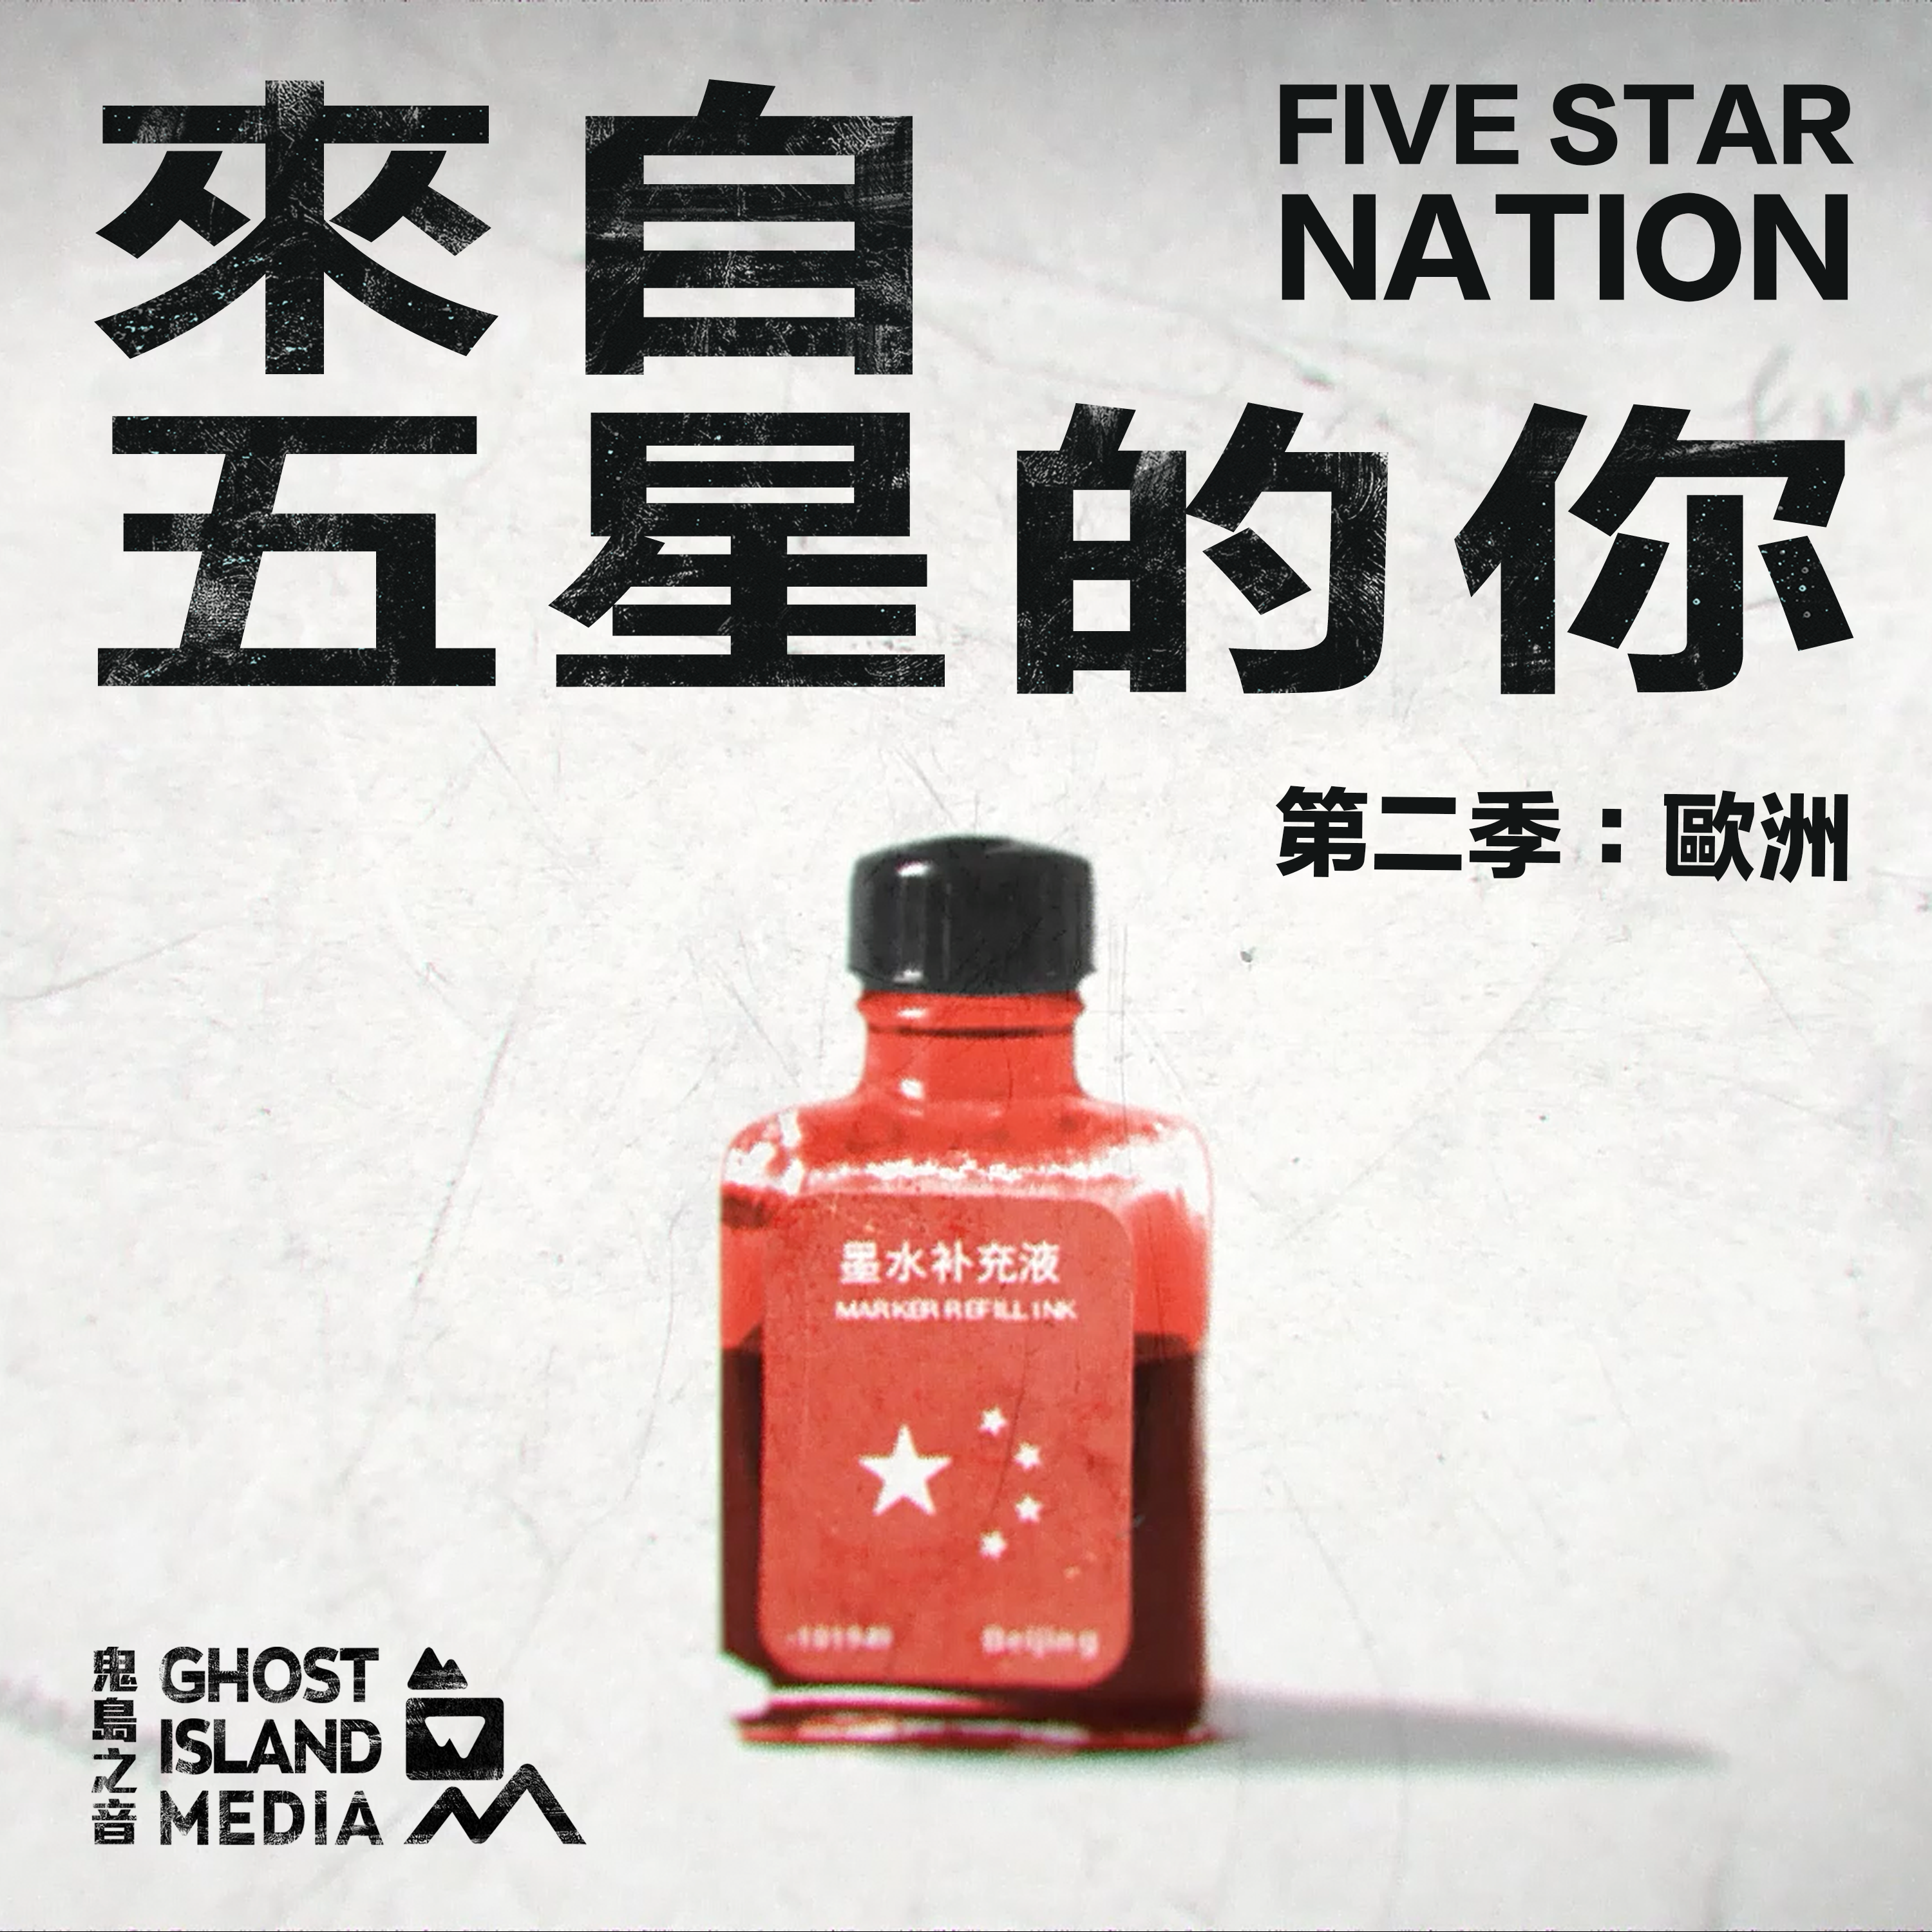 5-Star Nation